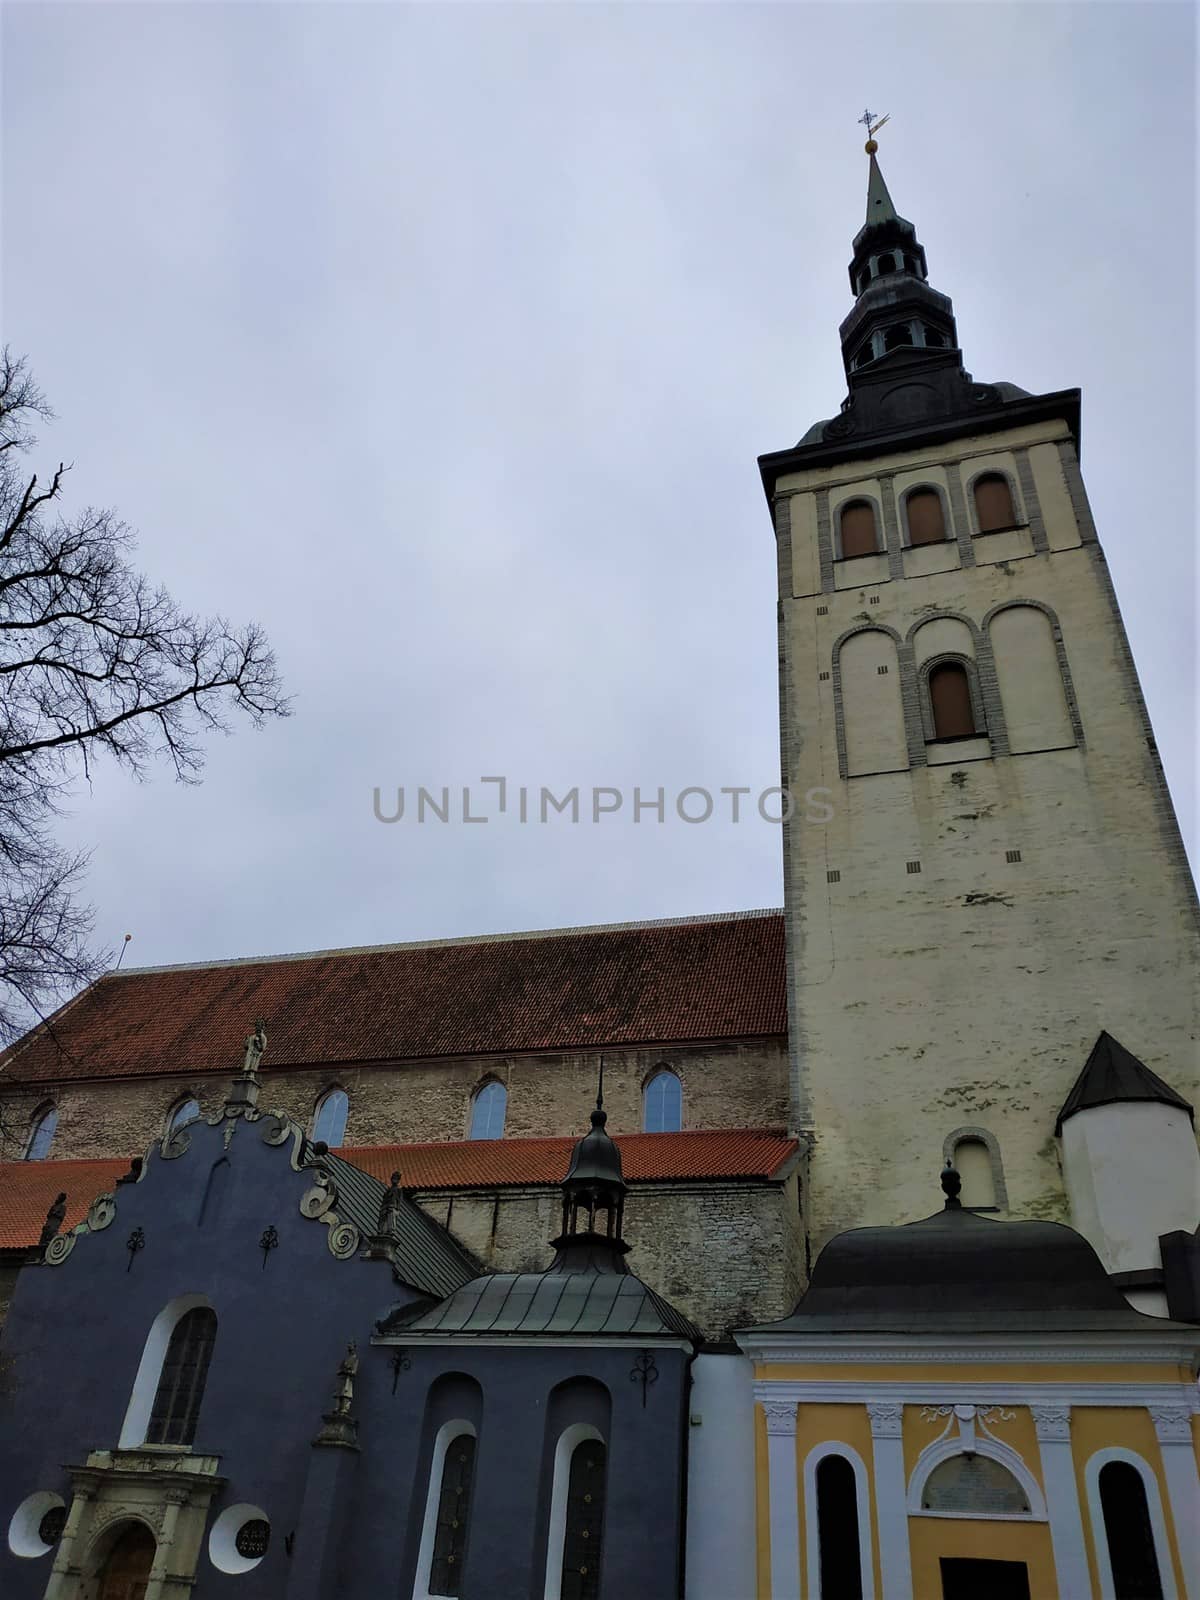 Bell tower of St Nicholas' church in Tallinn, Estonia